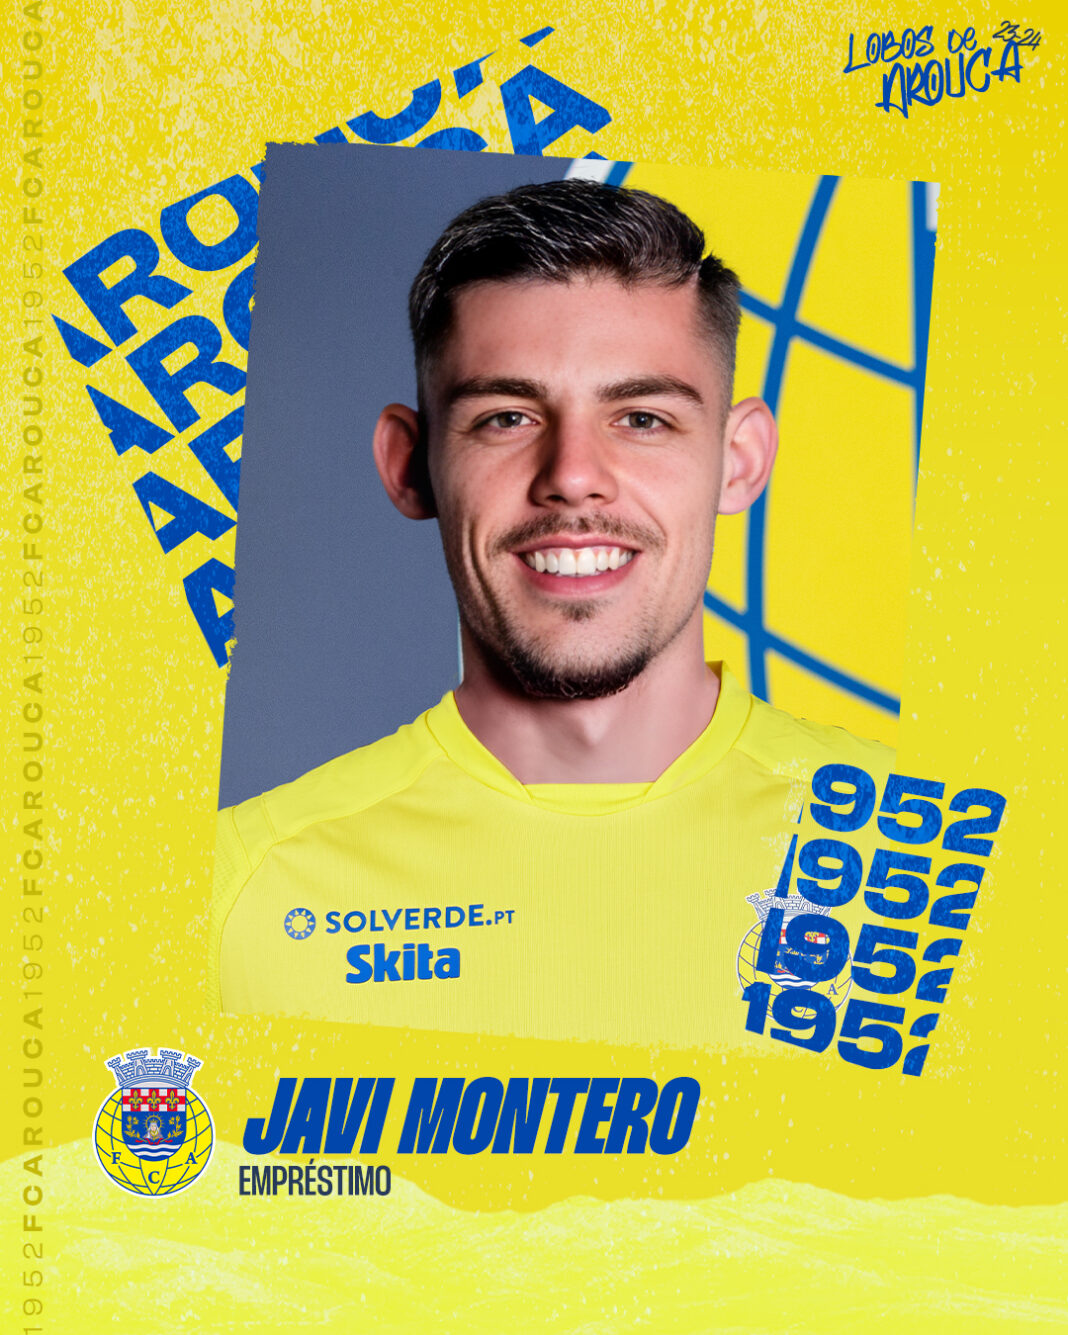 Javi Montero FC Arouca